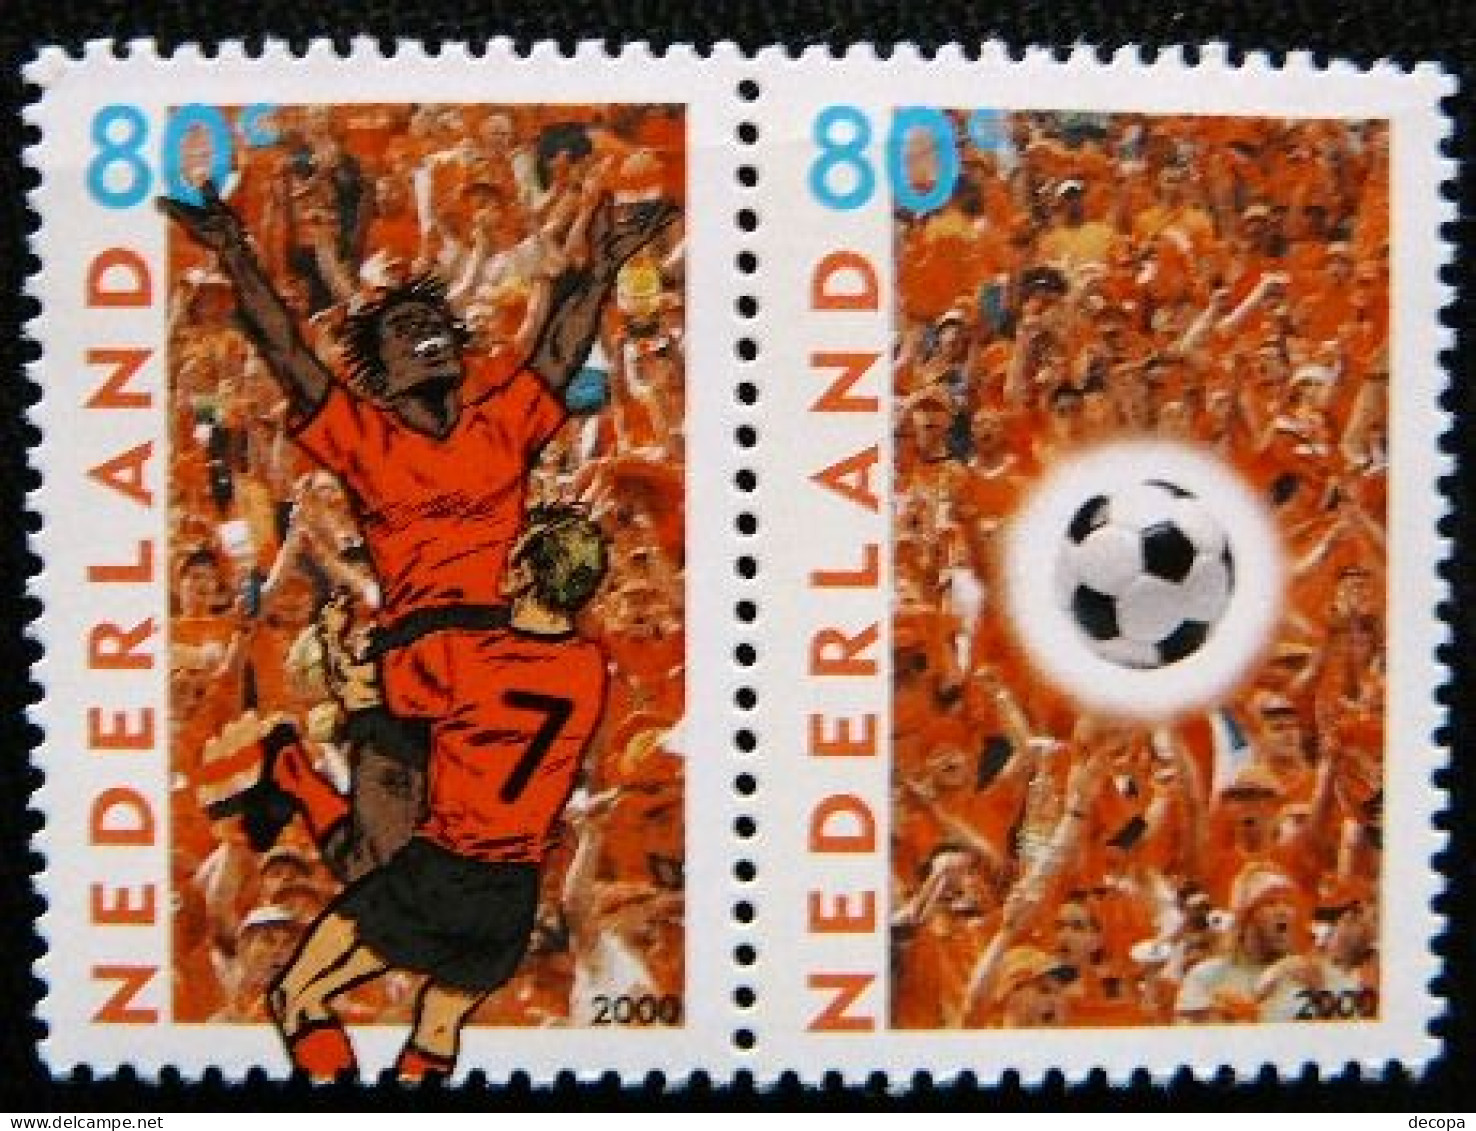 (dcbv-1358)  Netherlands  -  Pays-Bas   -   Nederland      Michel  1786-87      MNH   2003 - Fußball-Europameisterschaft (UEFA)